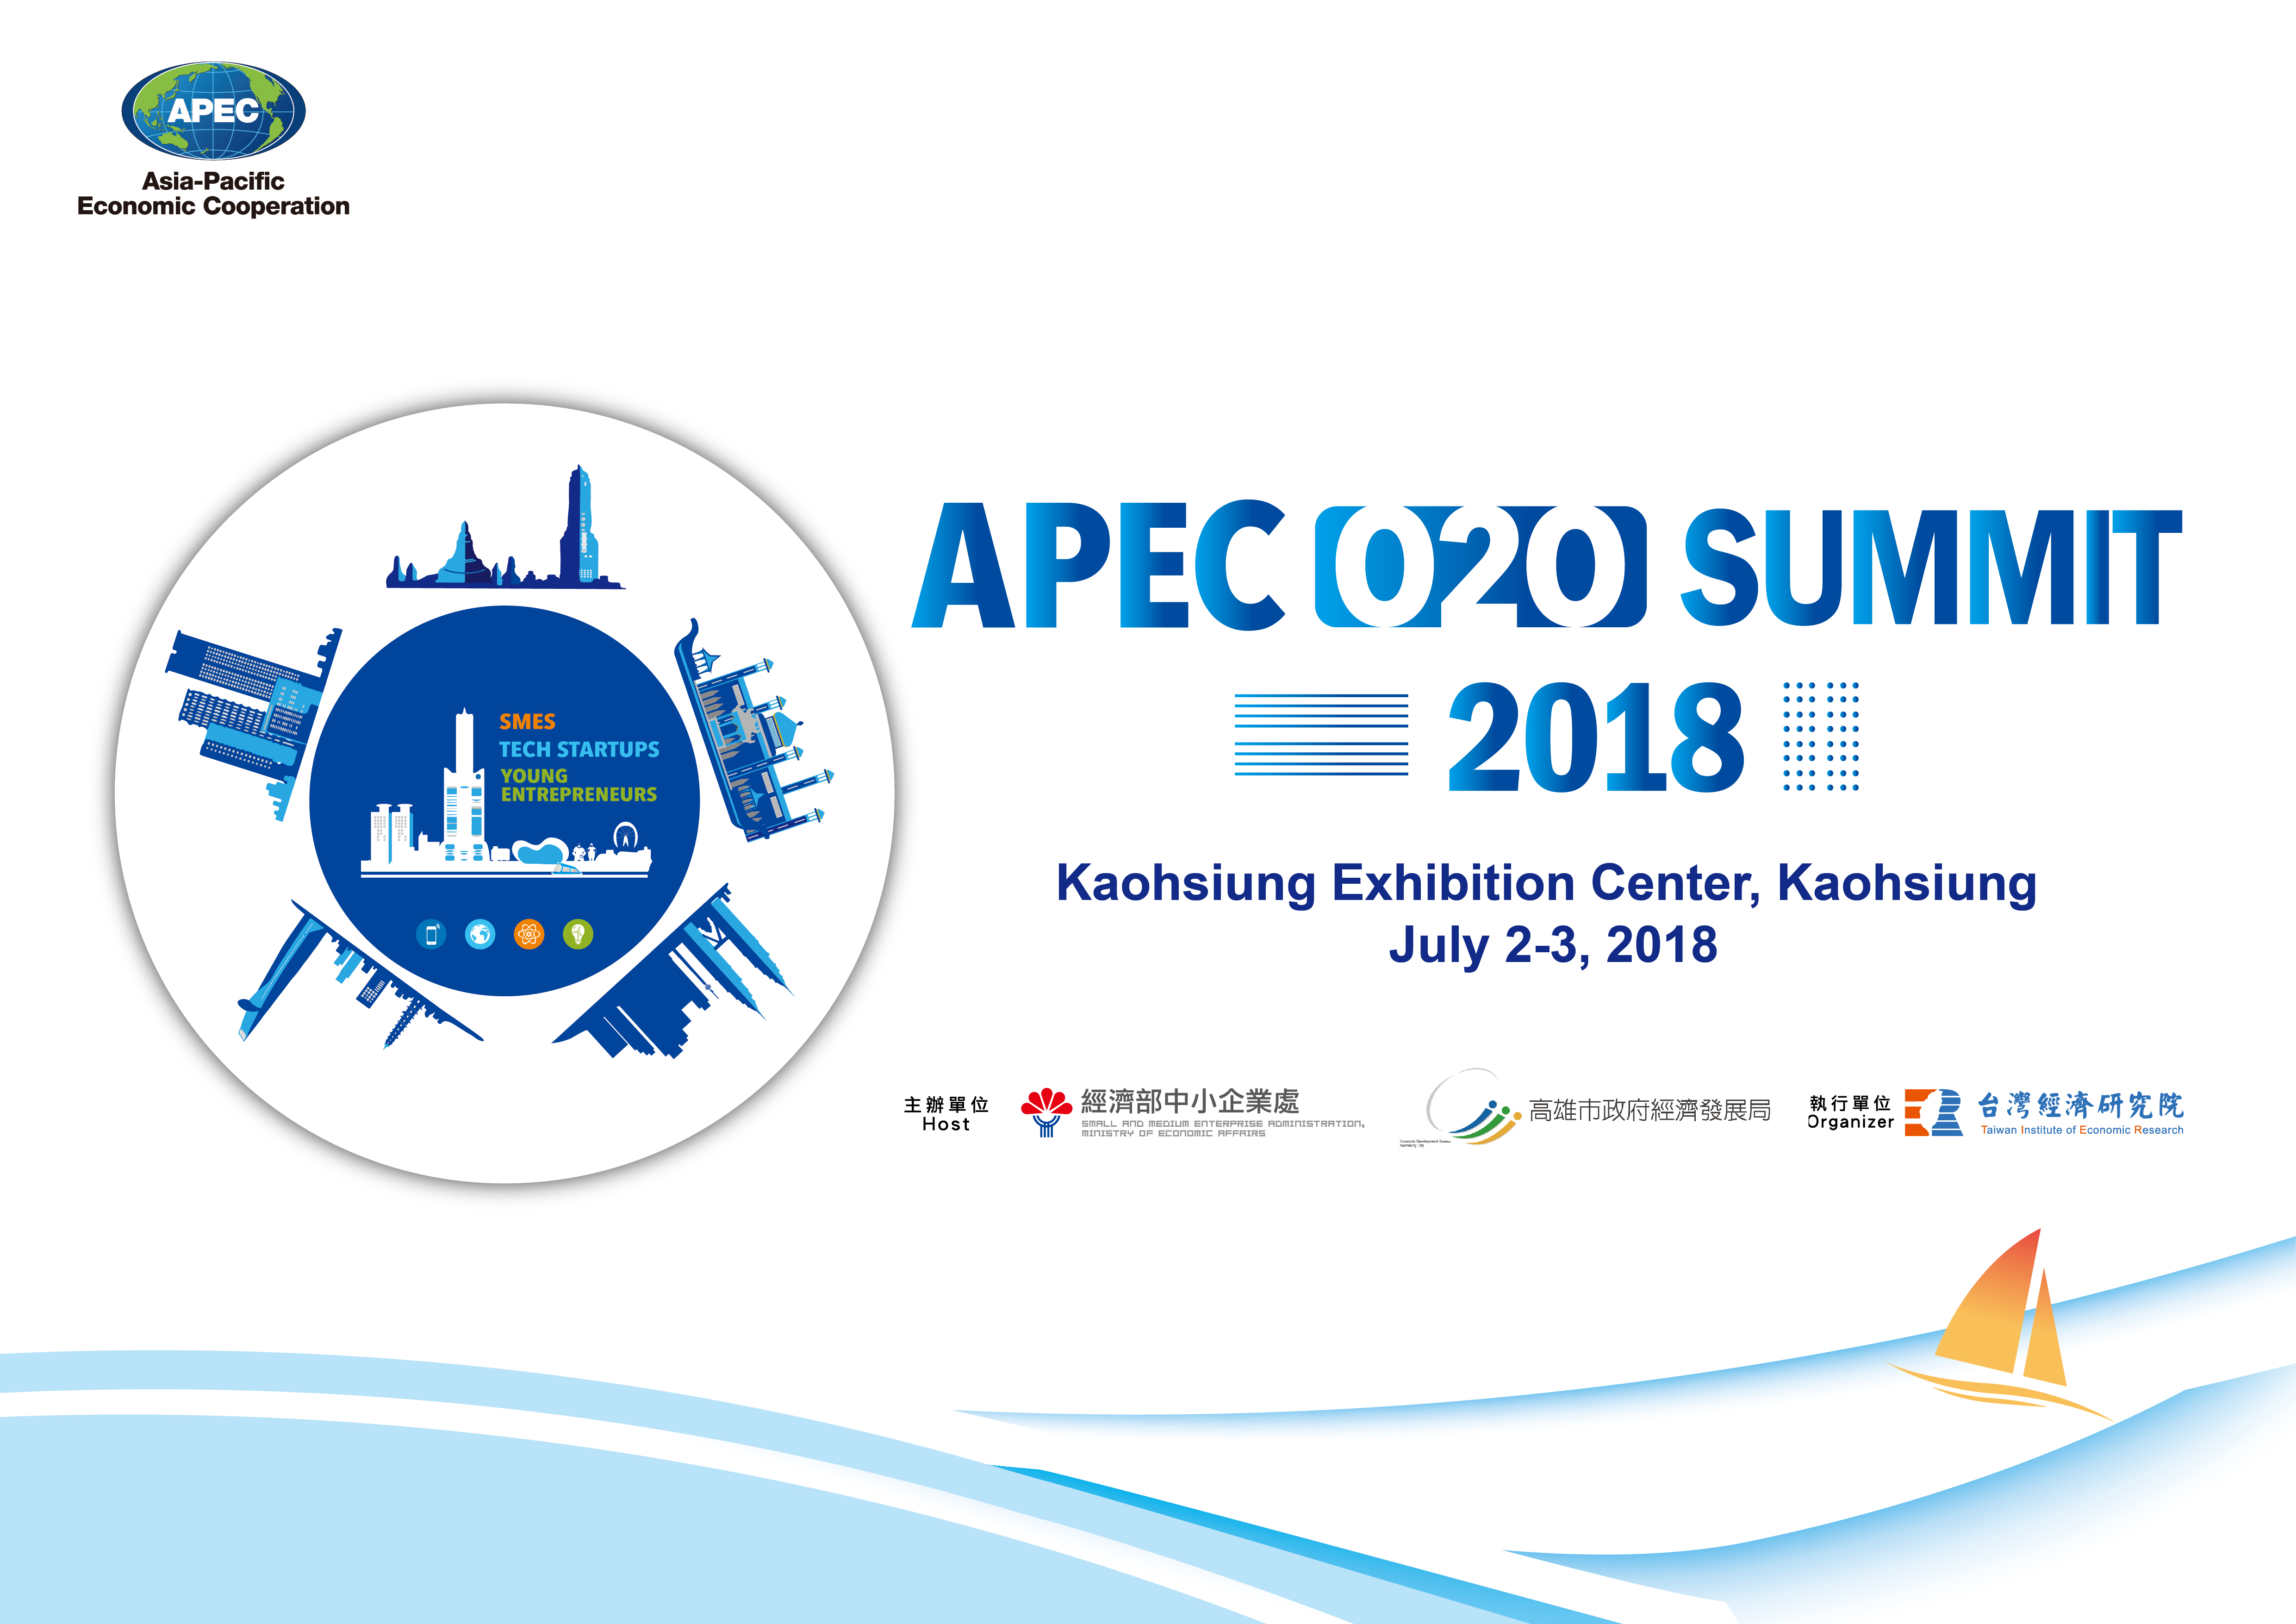 APEC O2O Summit - Kaohsiung